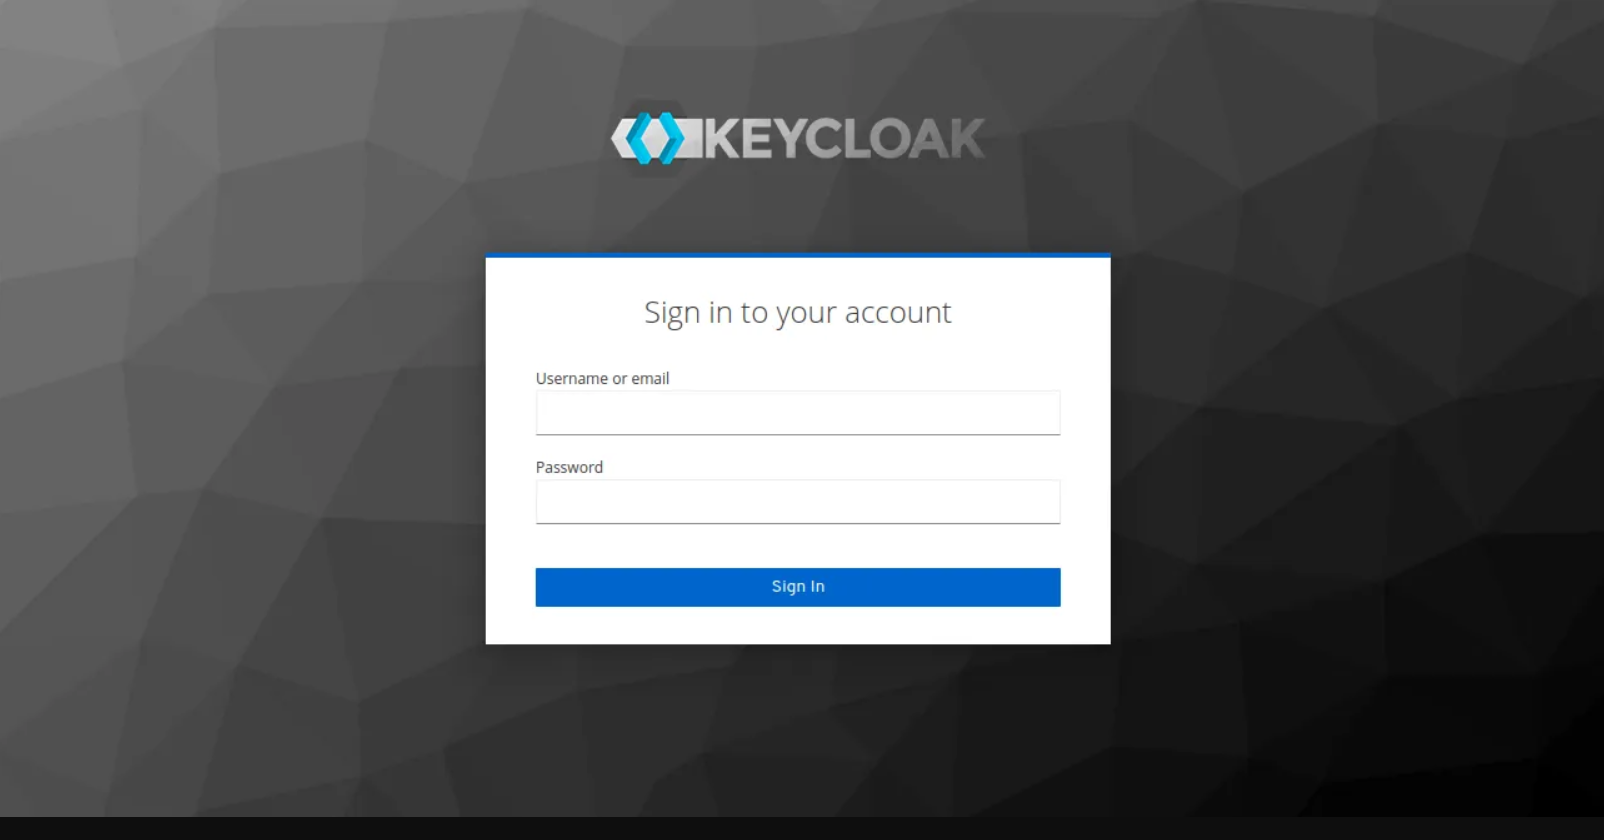 Keycloak login screen